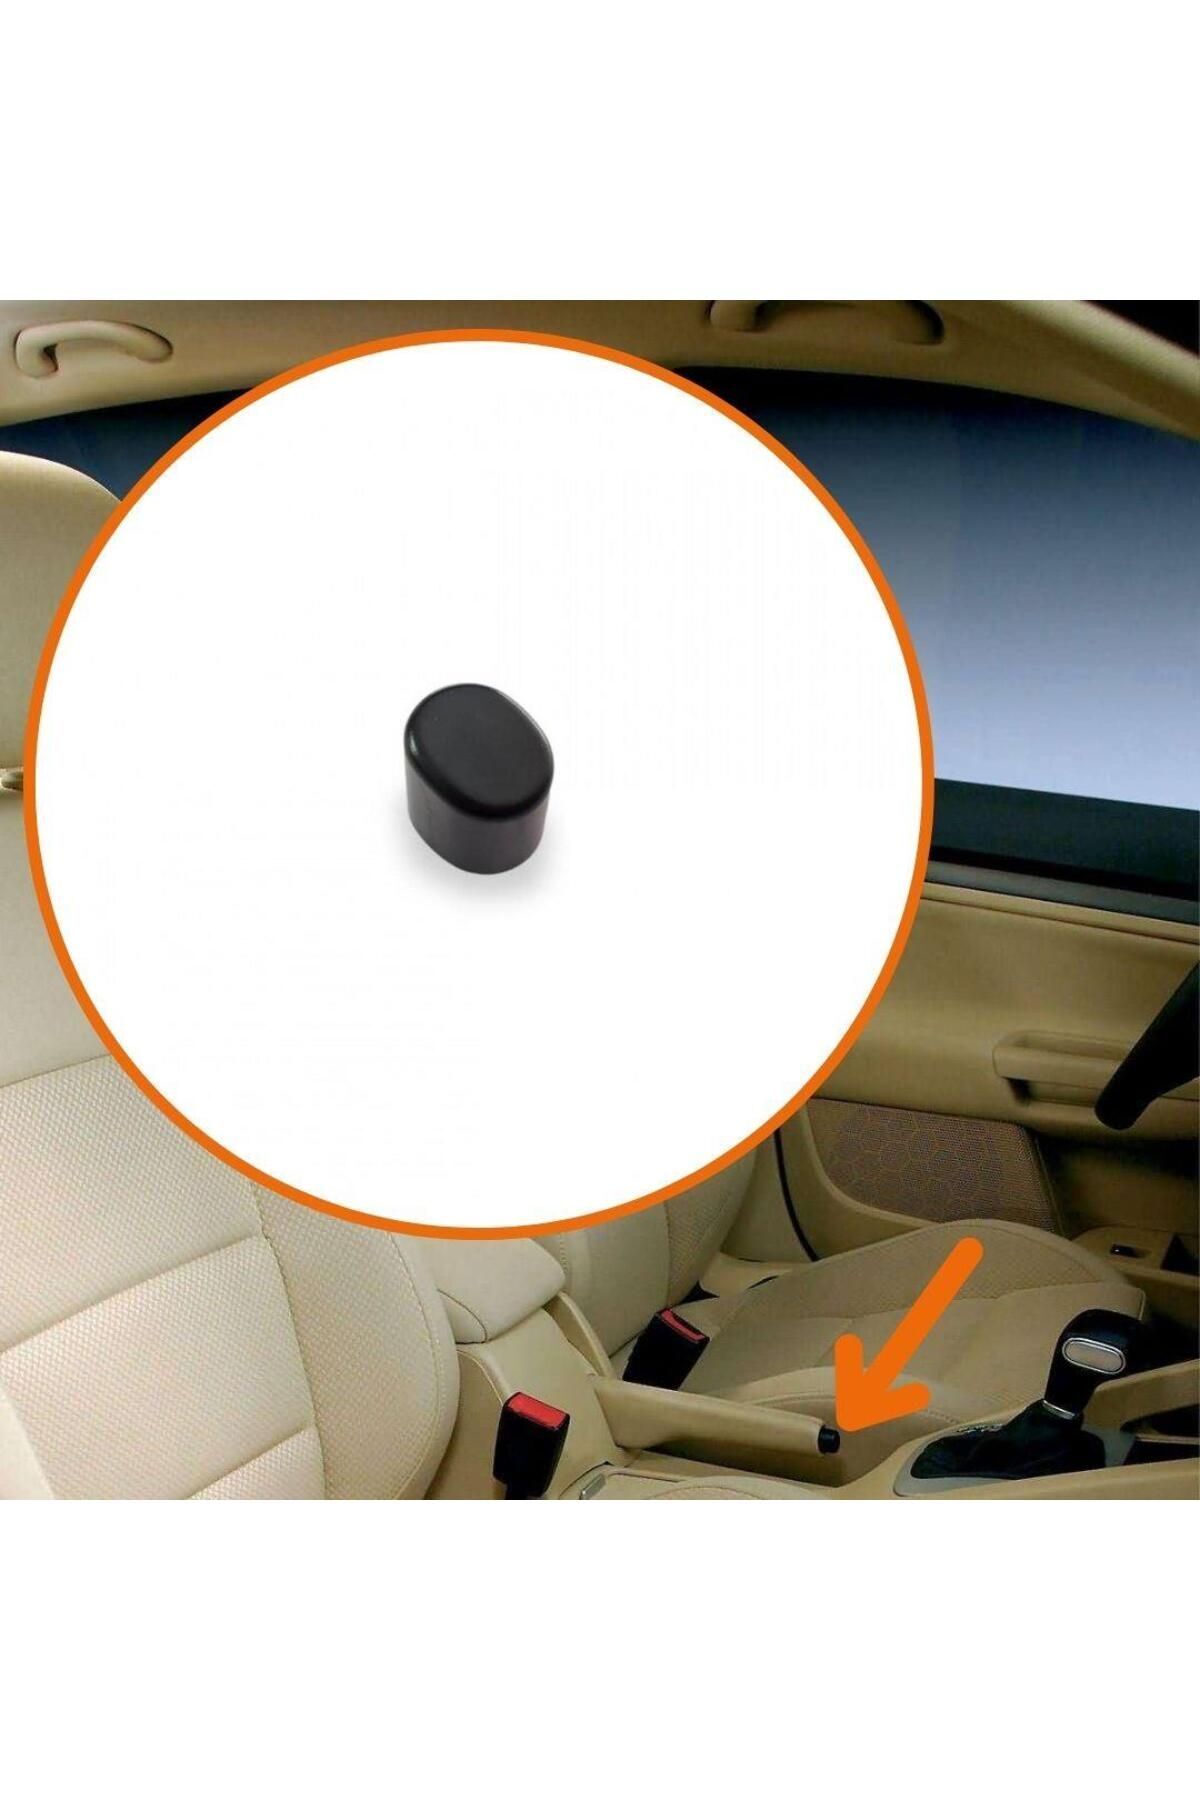 gkl El Fren Kolu Basma Düğmesi Kapağı Siyah VW EOS 2006-2011 1K0711303J